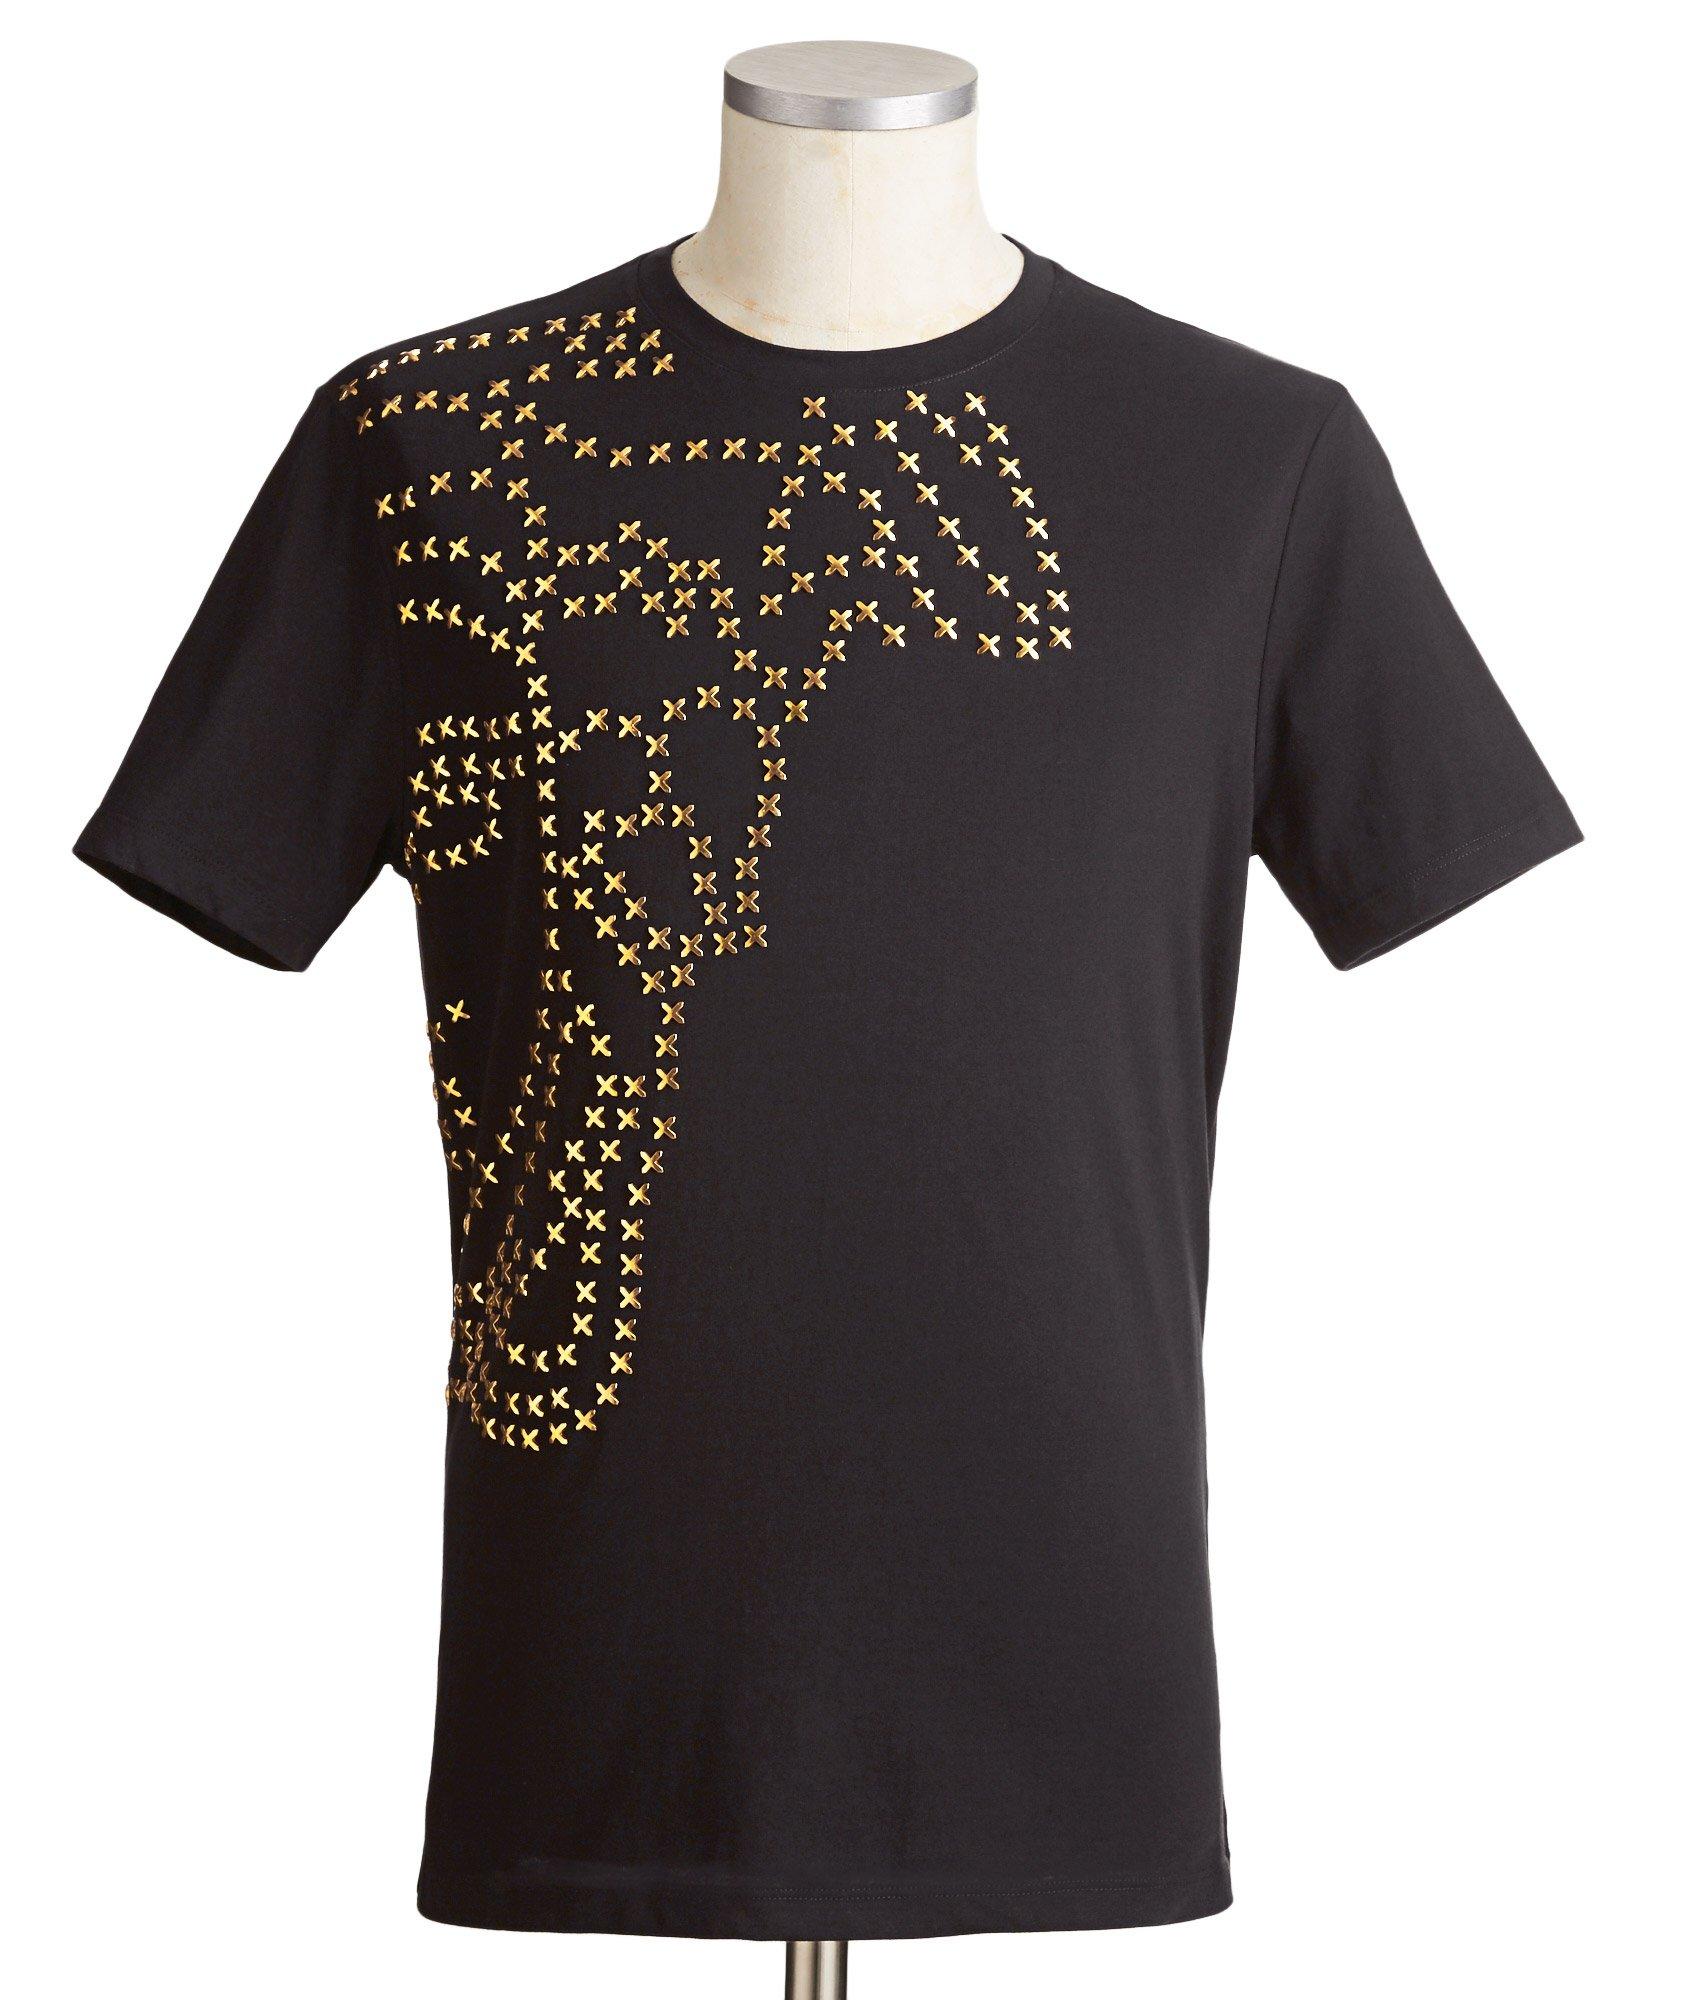 Studded Medusa T-Shirt image 0